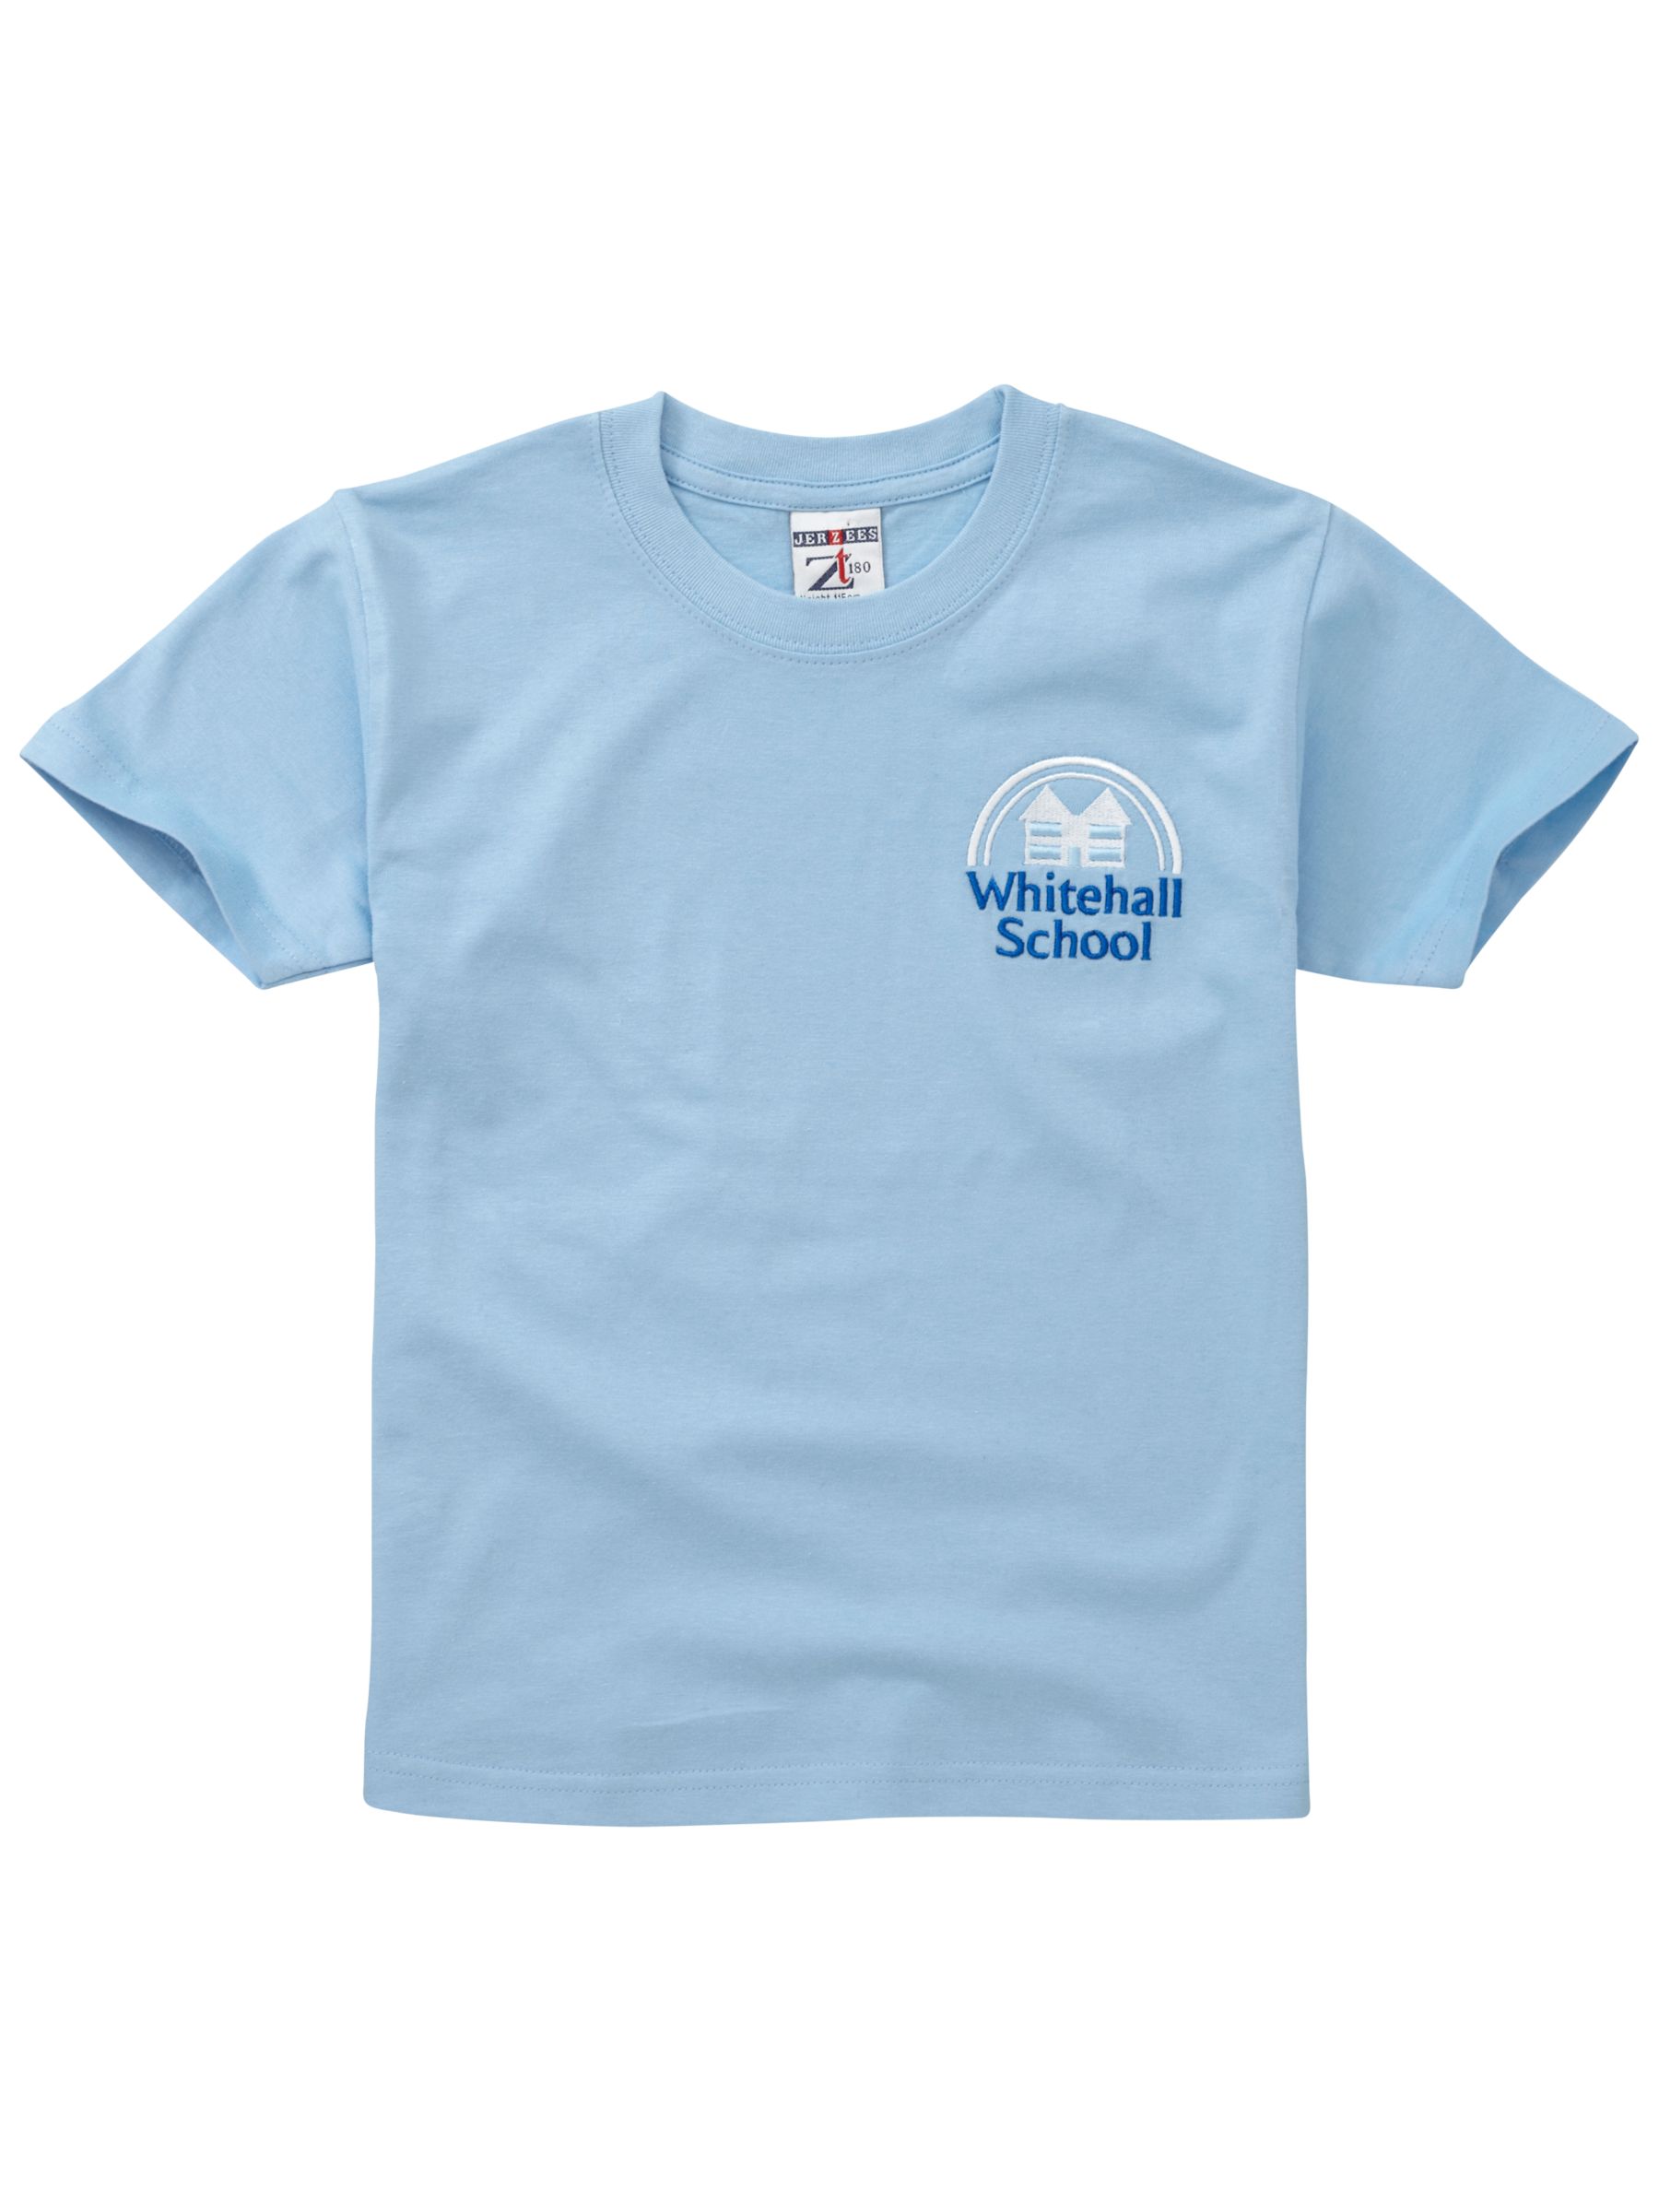 Unisex T-Shirt, Sky blue